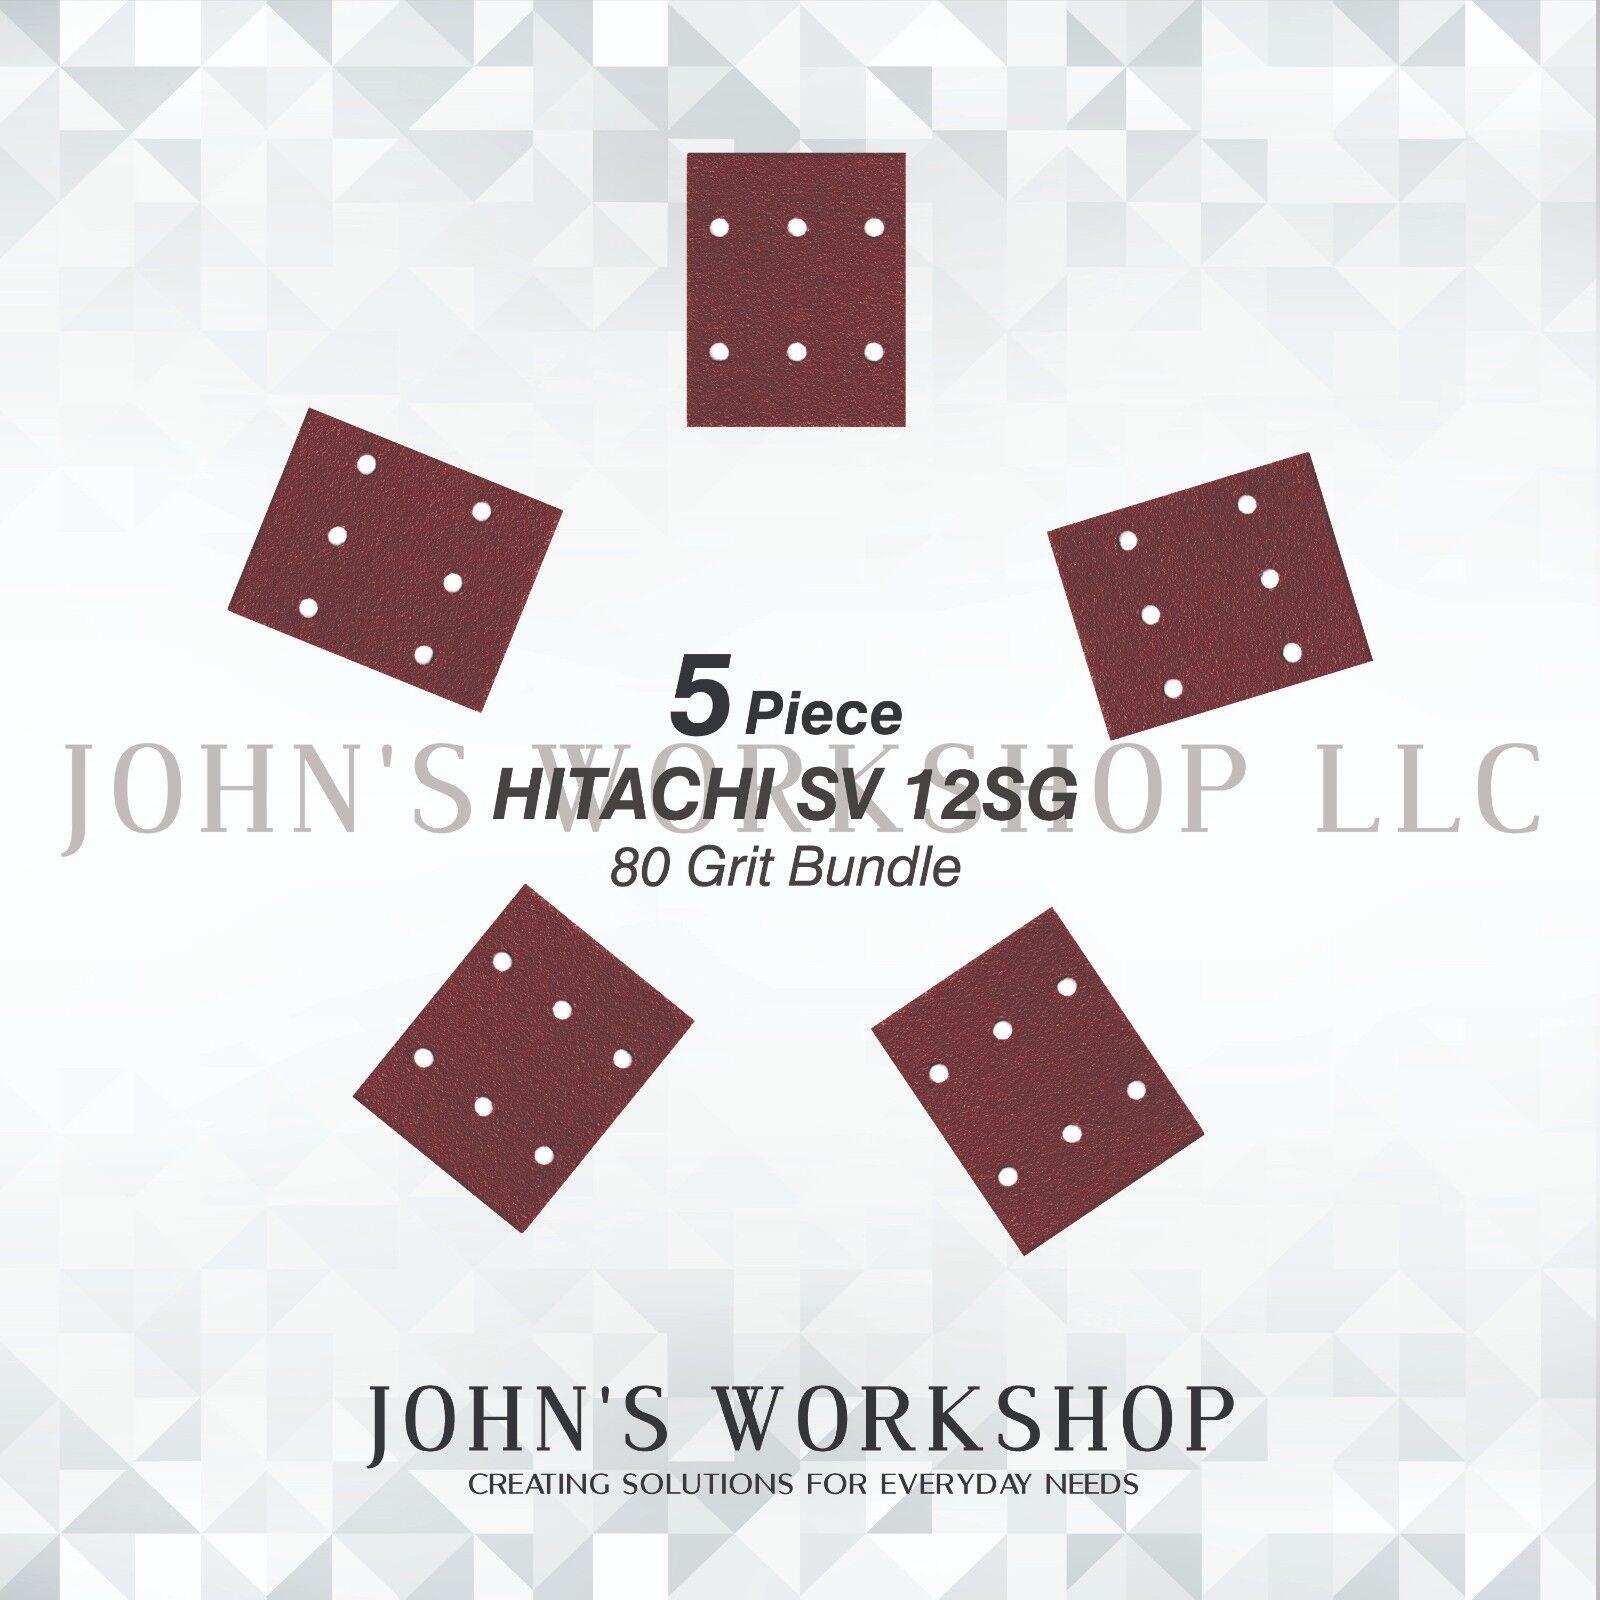 HITACHI SV 12SG - 1/4 Sheet - 80 Grit - No-Slip - 5 Sandpaper Bundle - $4.99